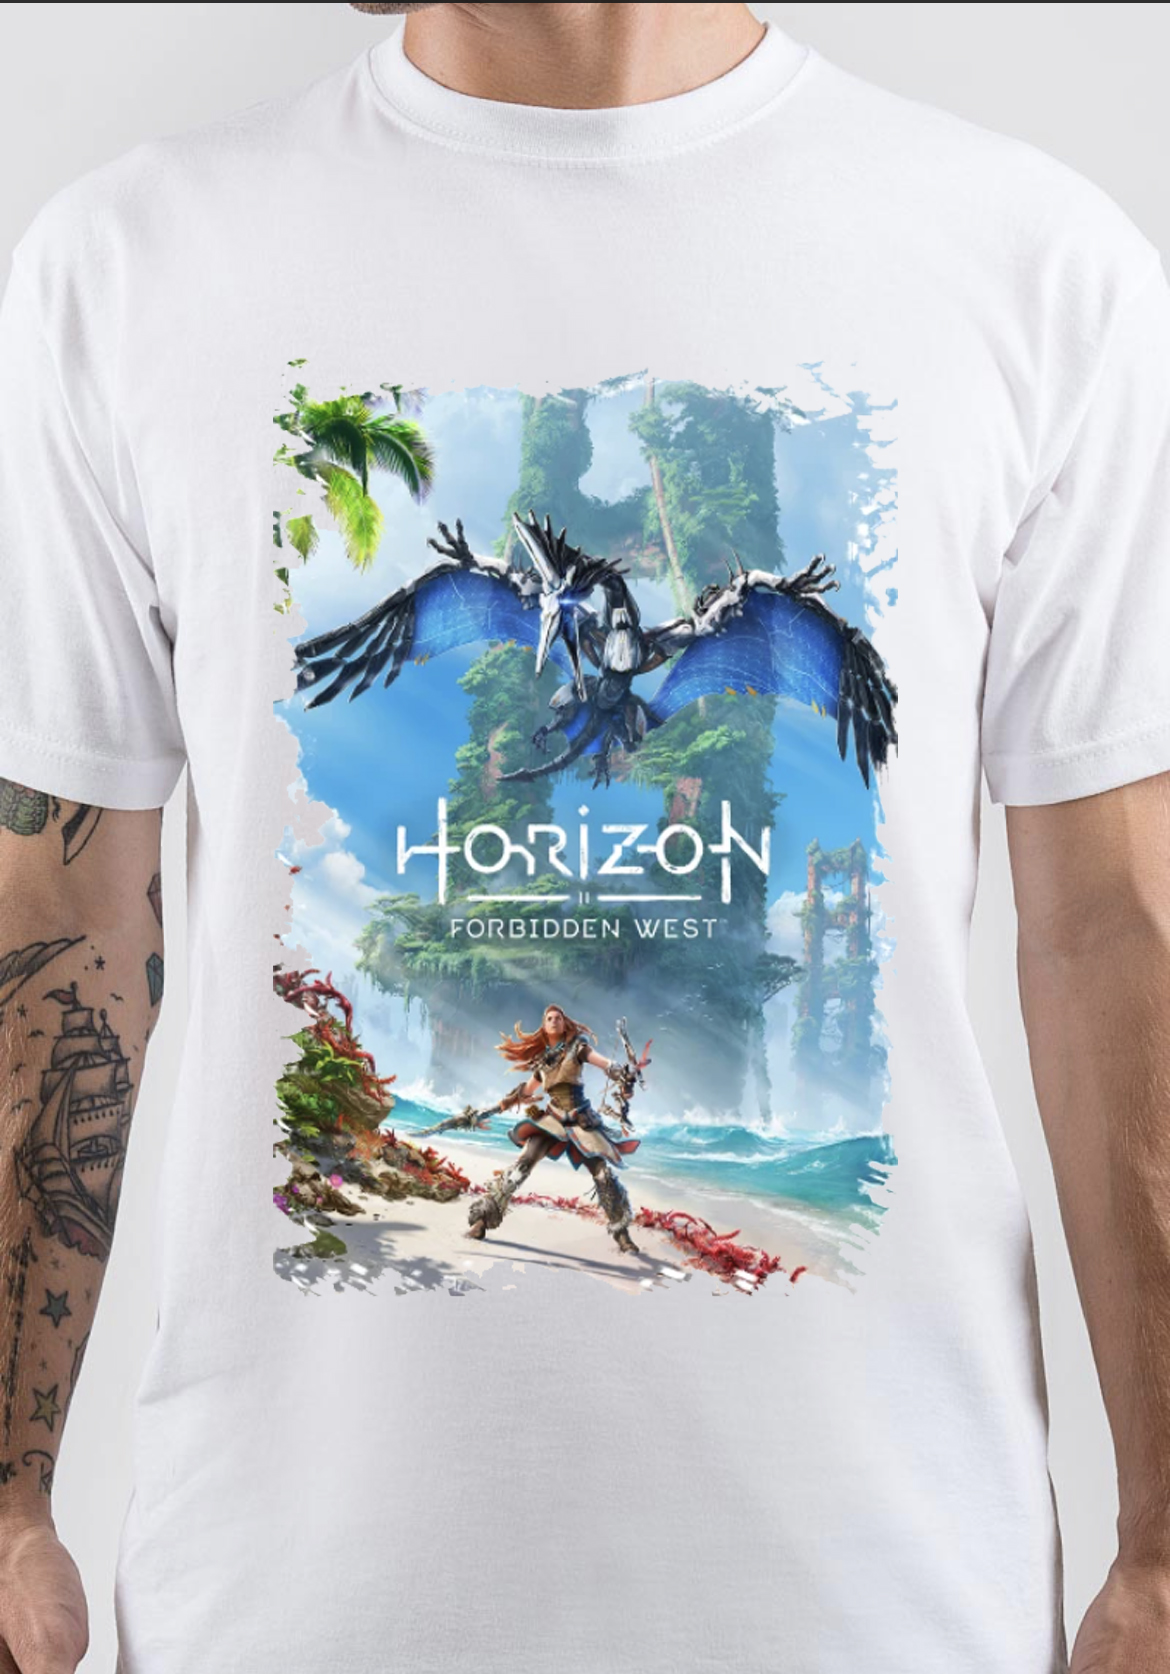 Horizon Forbidden West T-Shirt And Merchandise